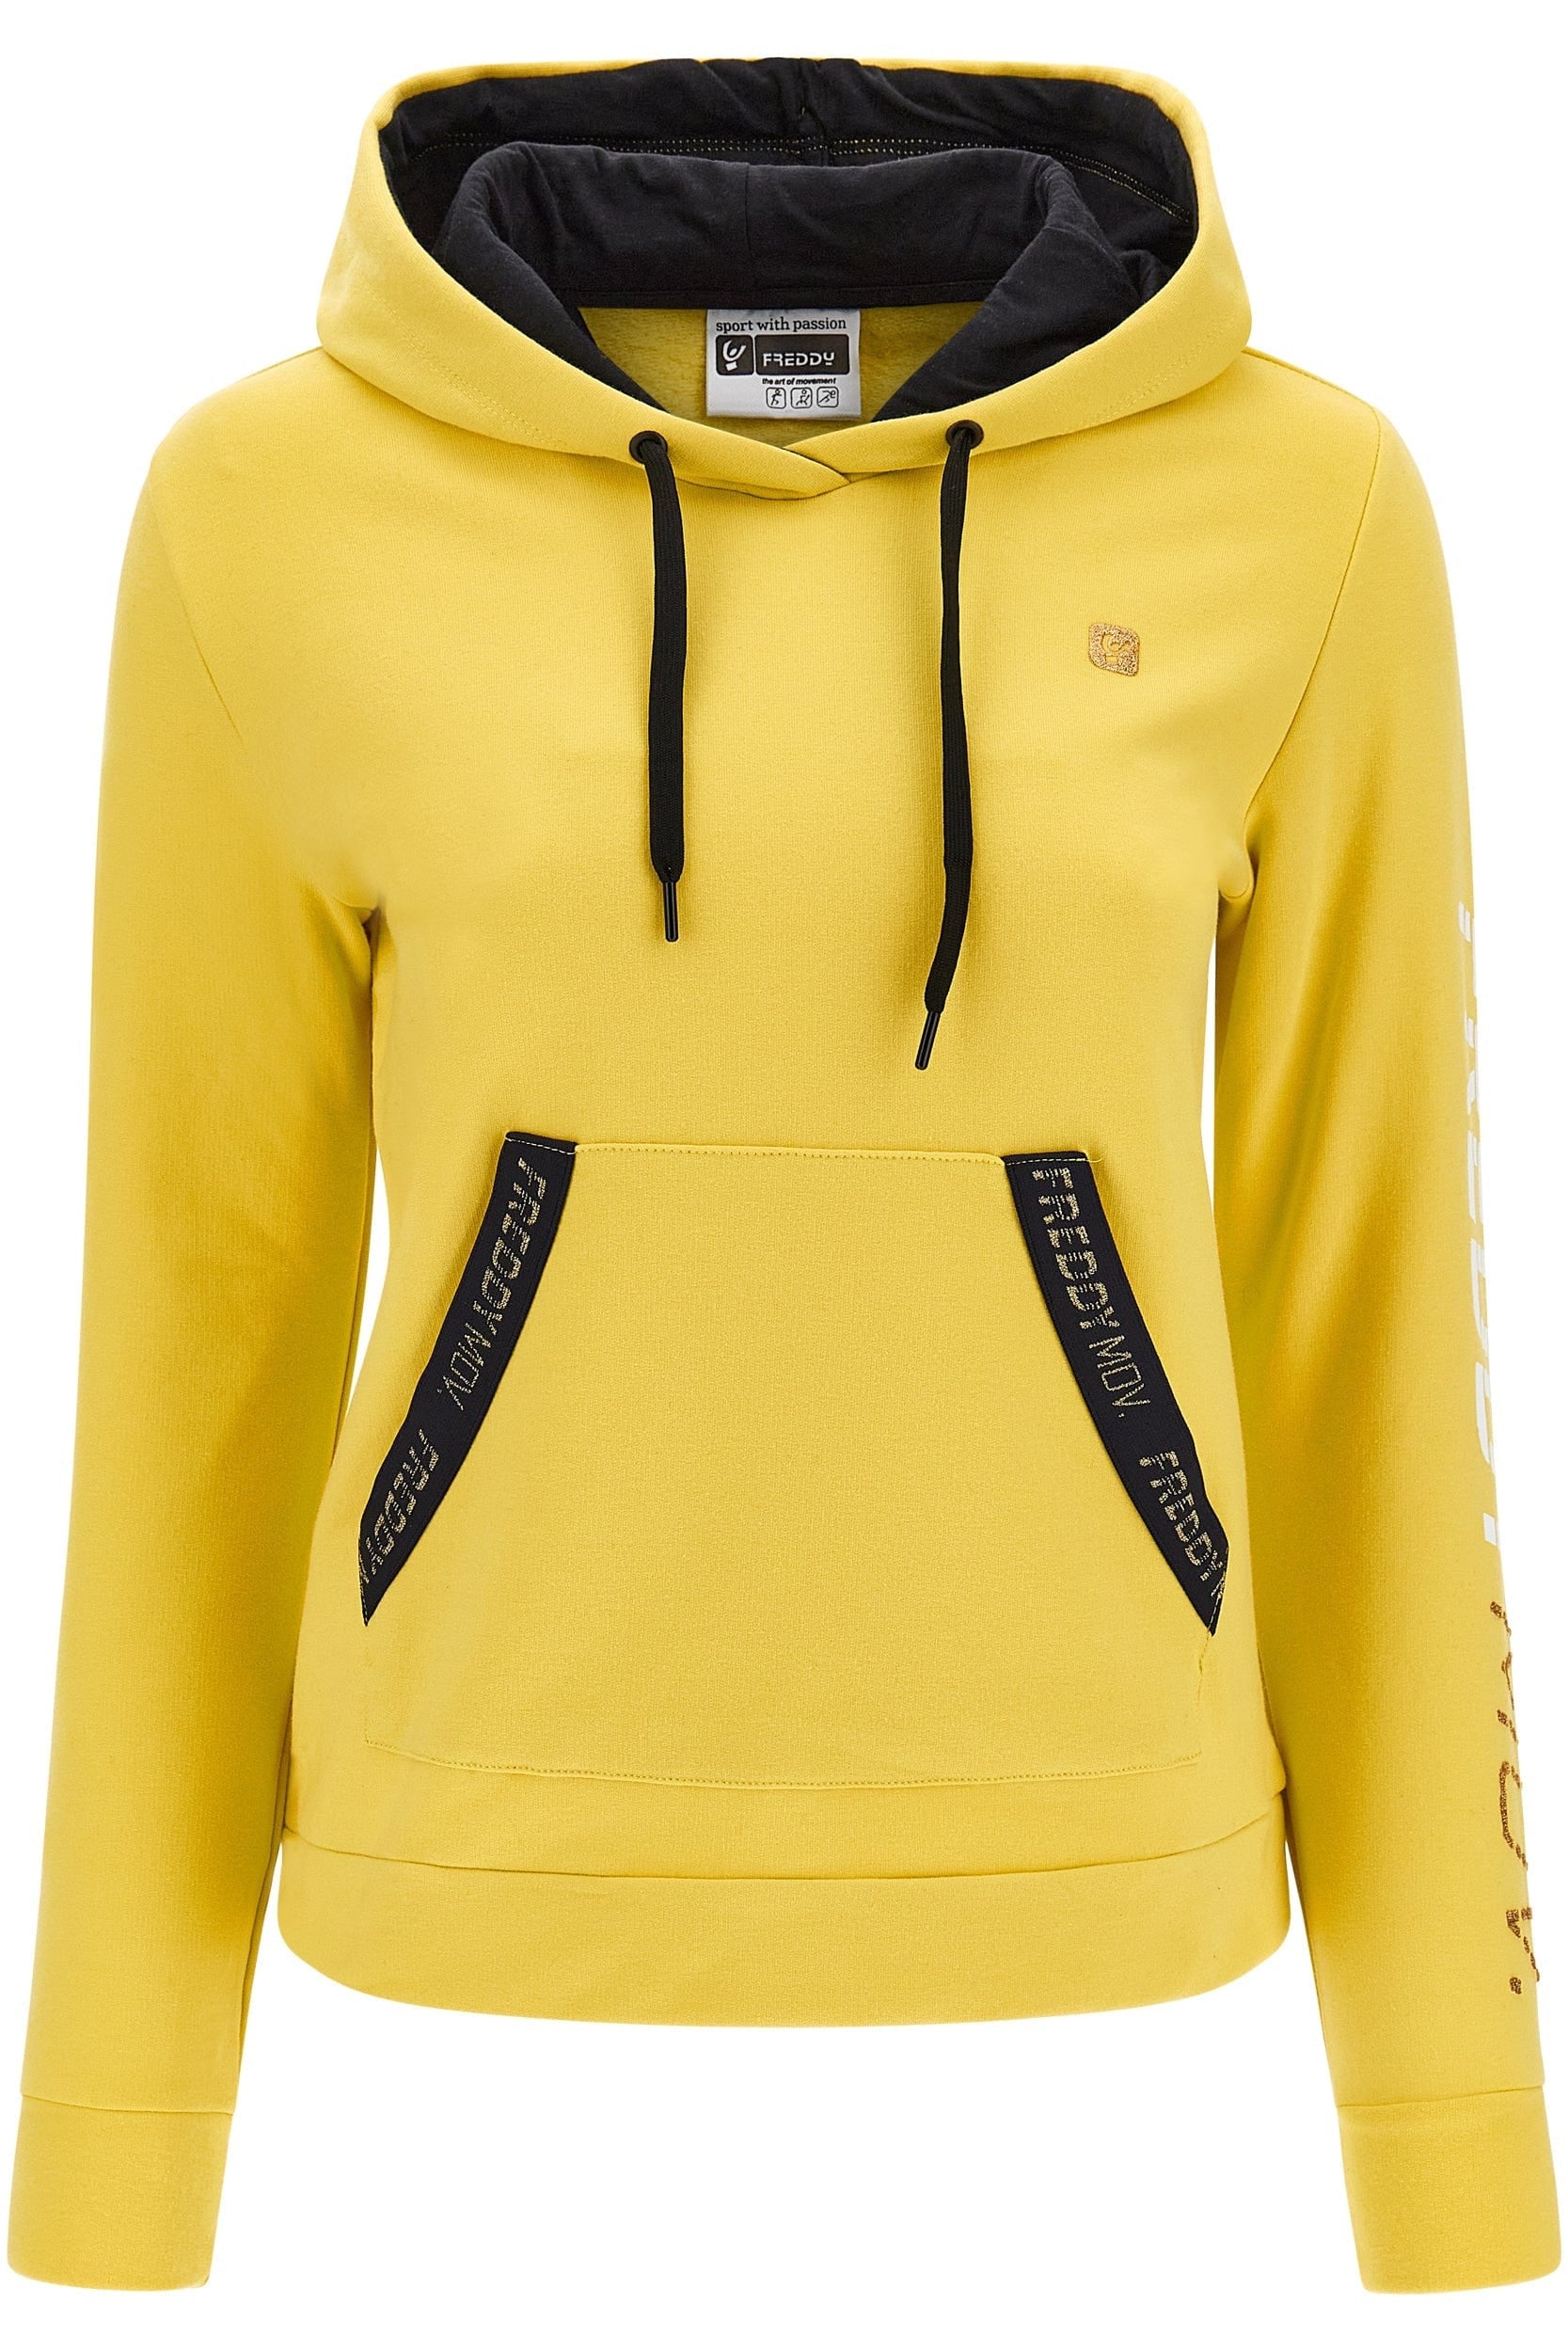 Sweatshirt with hood - Yellow + Gold glitter details 1